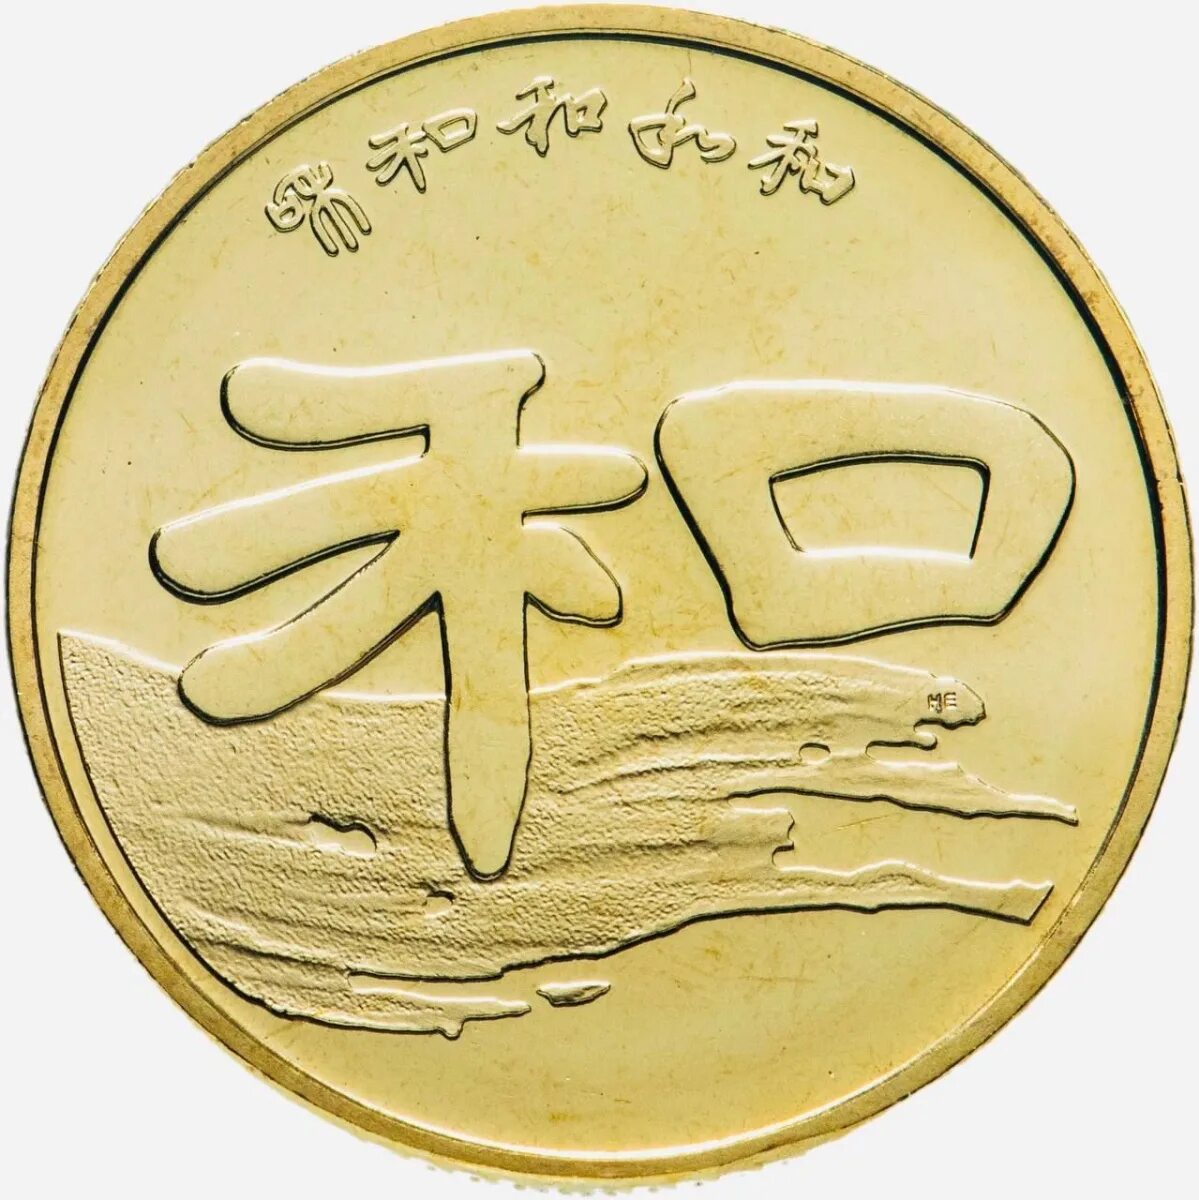 Китайский юань монеты. Китайский юань монета. Китайский юань Монетка. Юань КНР монета. Монеты Китая 1 юань.